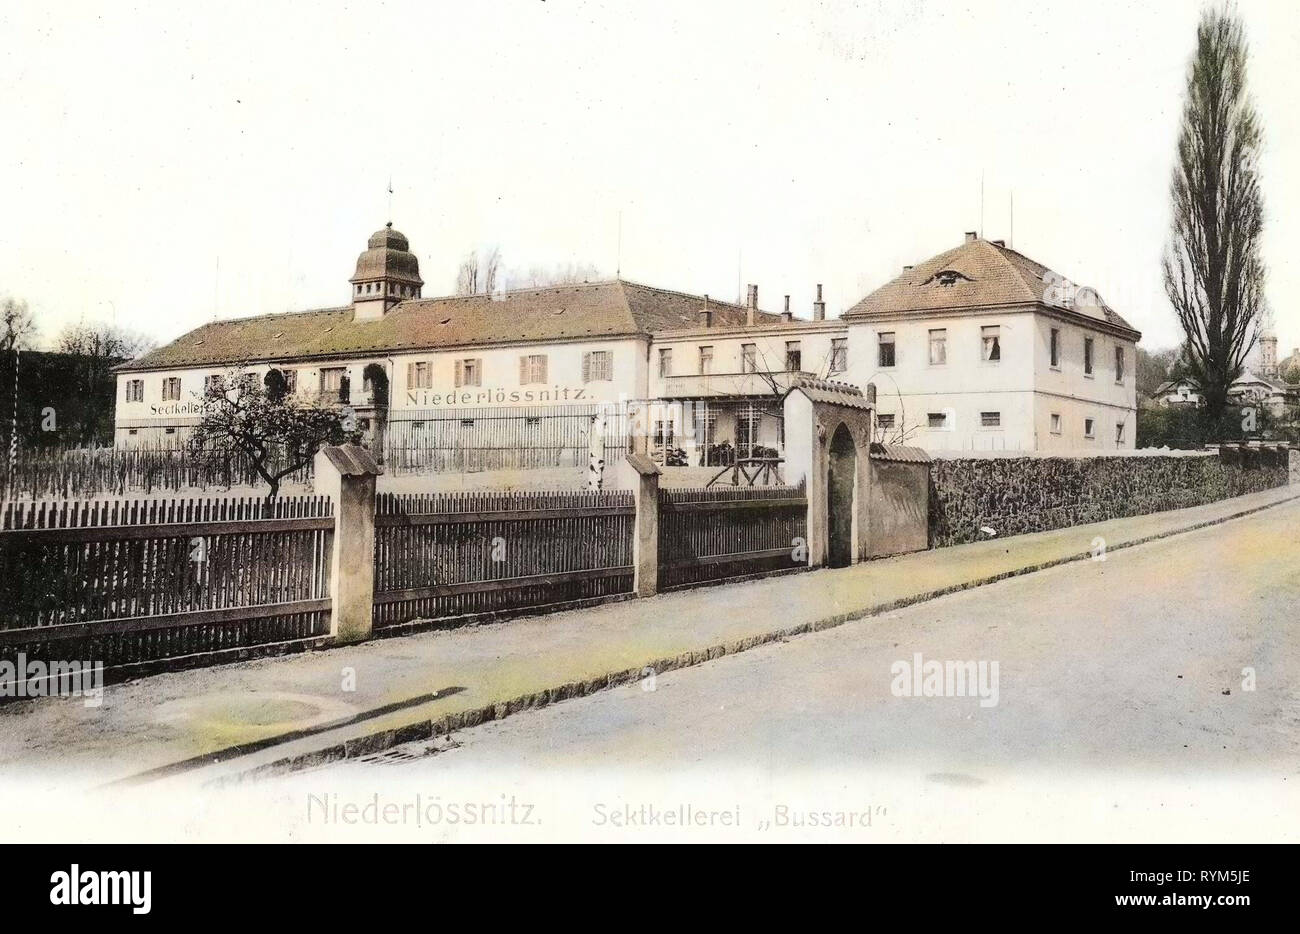 Sektkellerei Bussard, 1903, Landkreis Meißen, Niederlößnitz, Germany Stock Photo